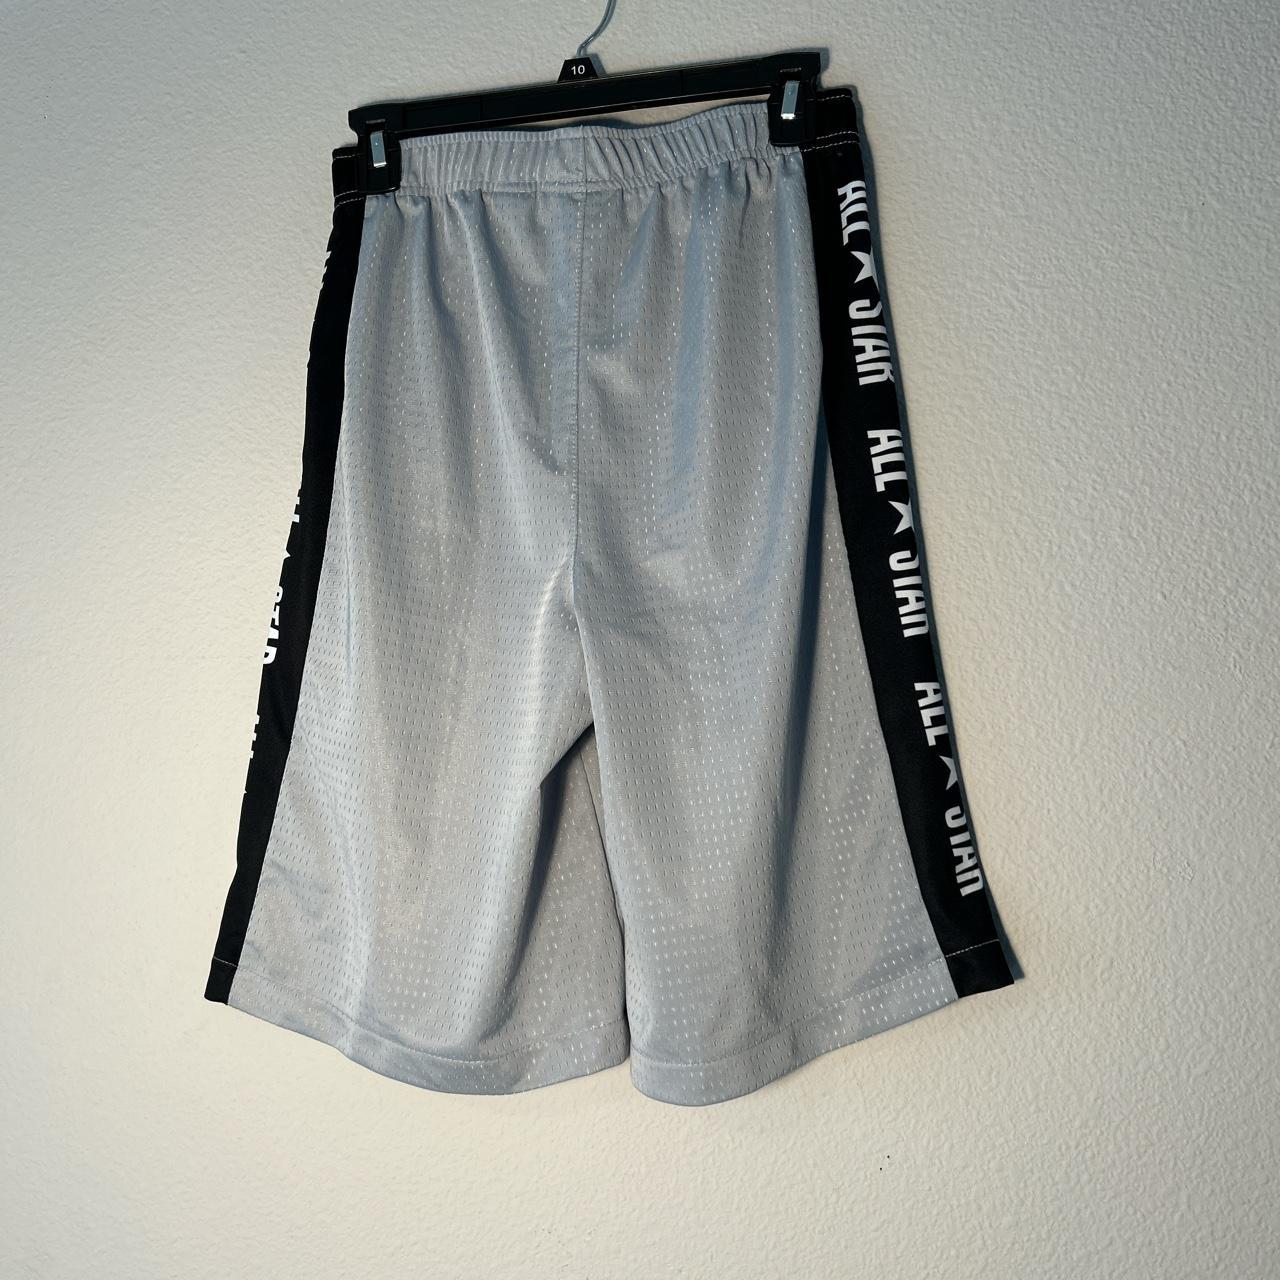 Converse Men's Grey and Black Shorts (3)